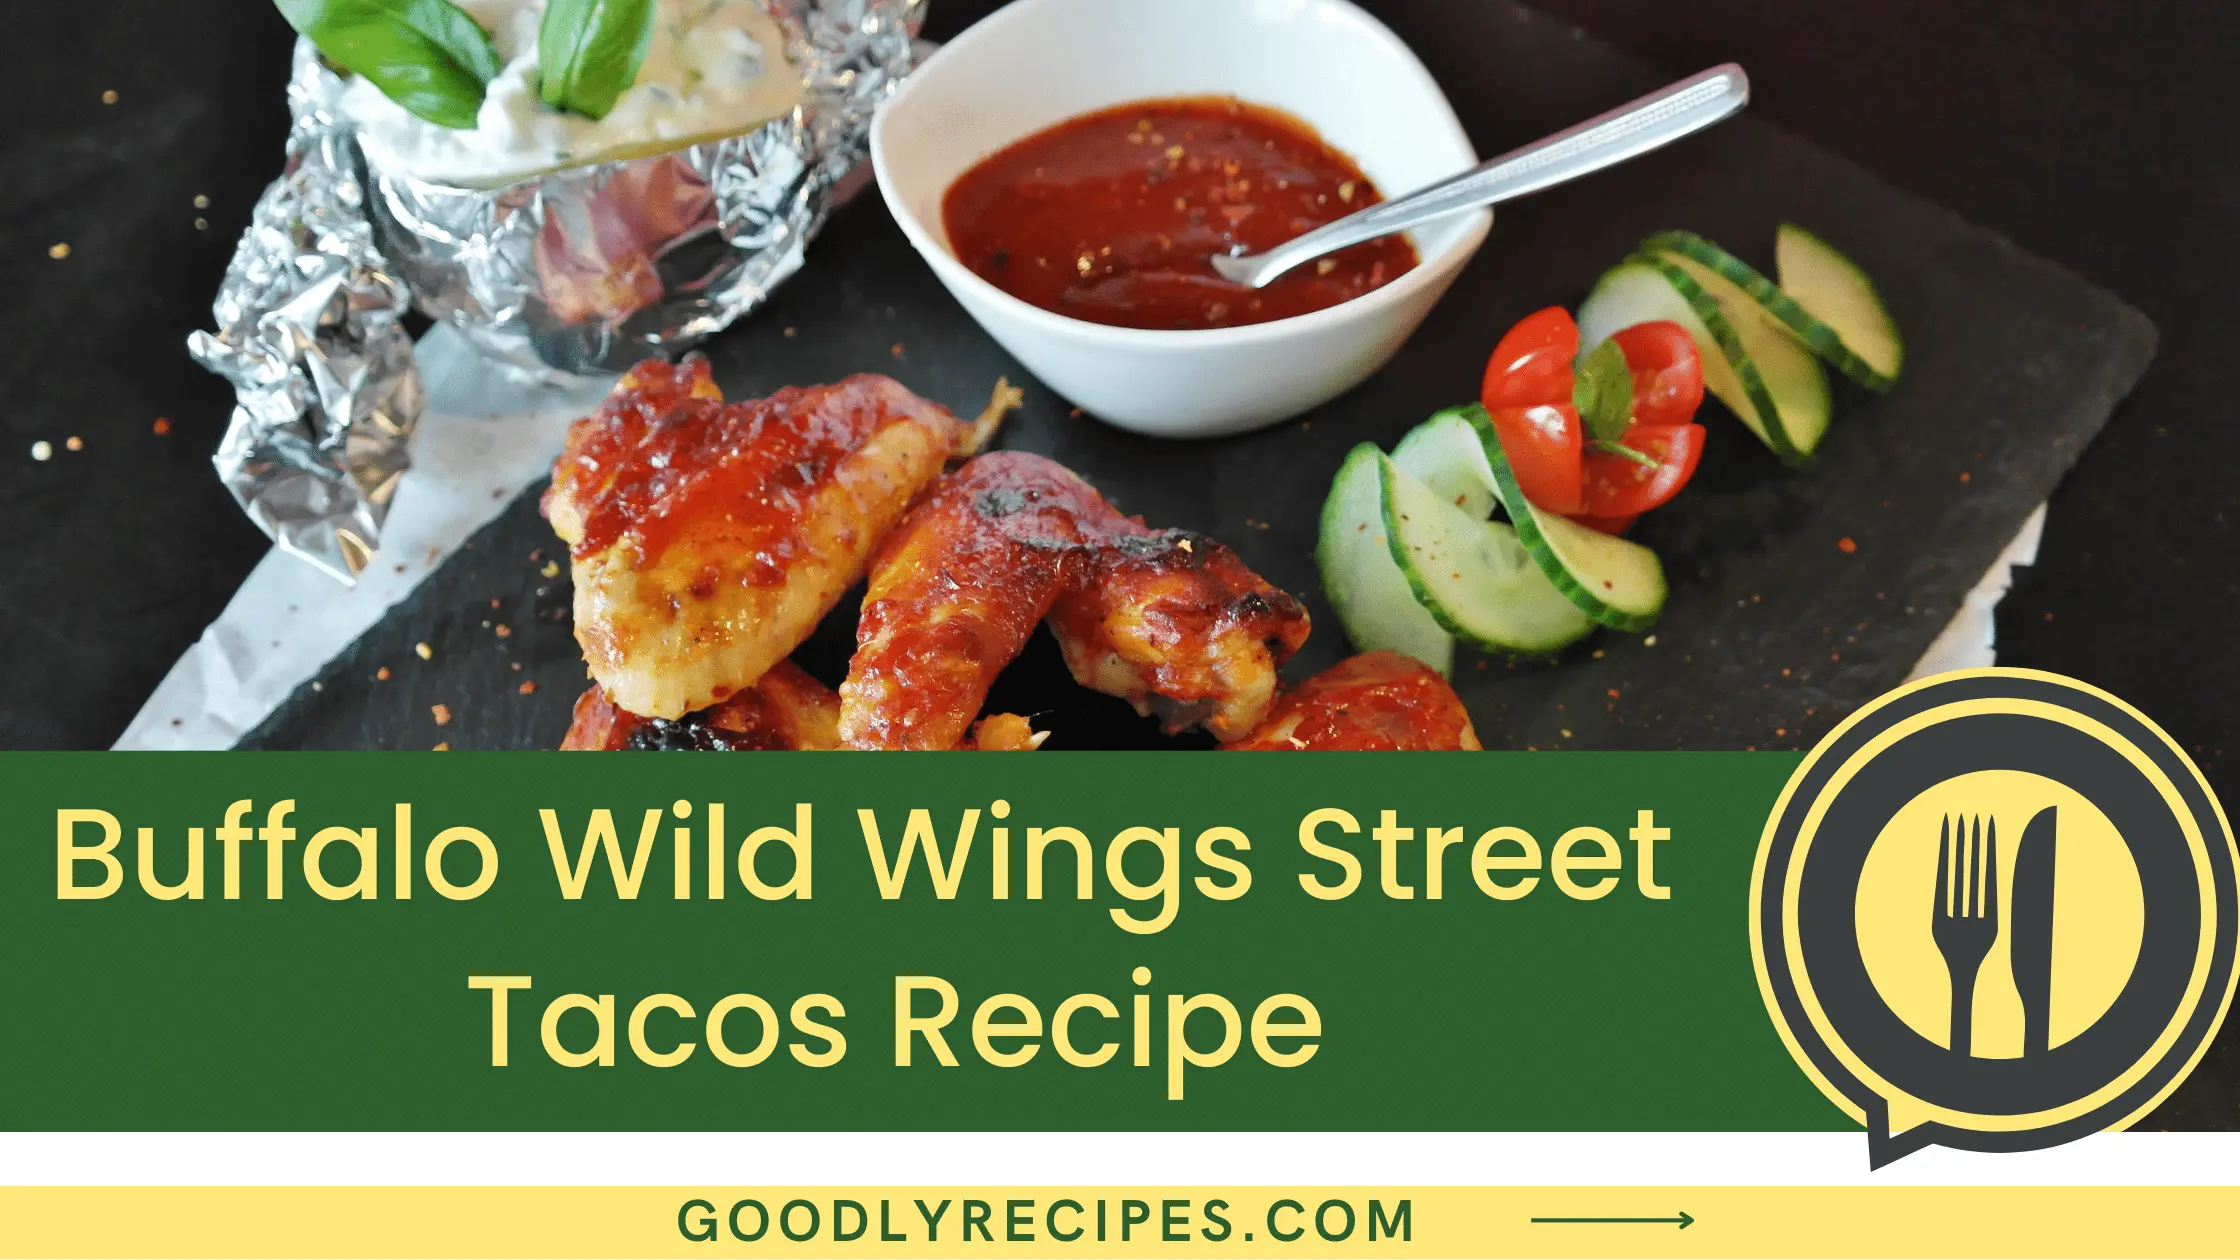 What is Buffalo Wild Wings Street Tacos?